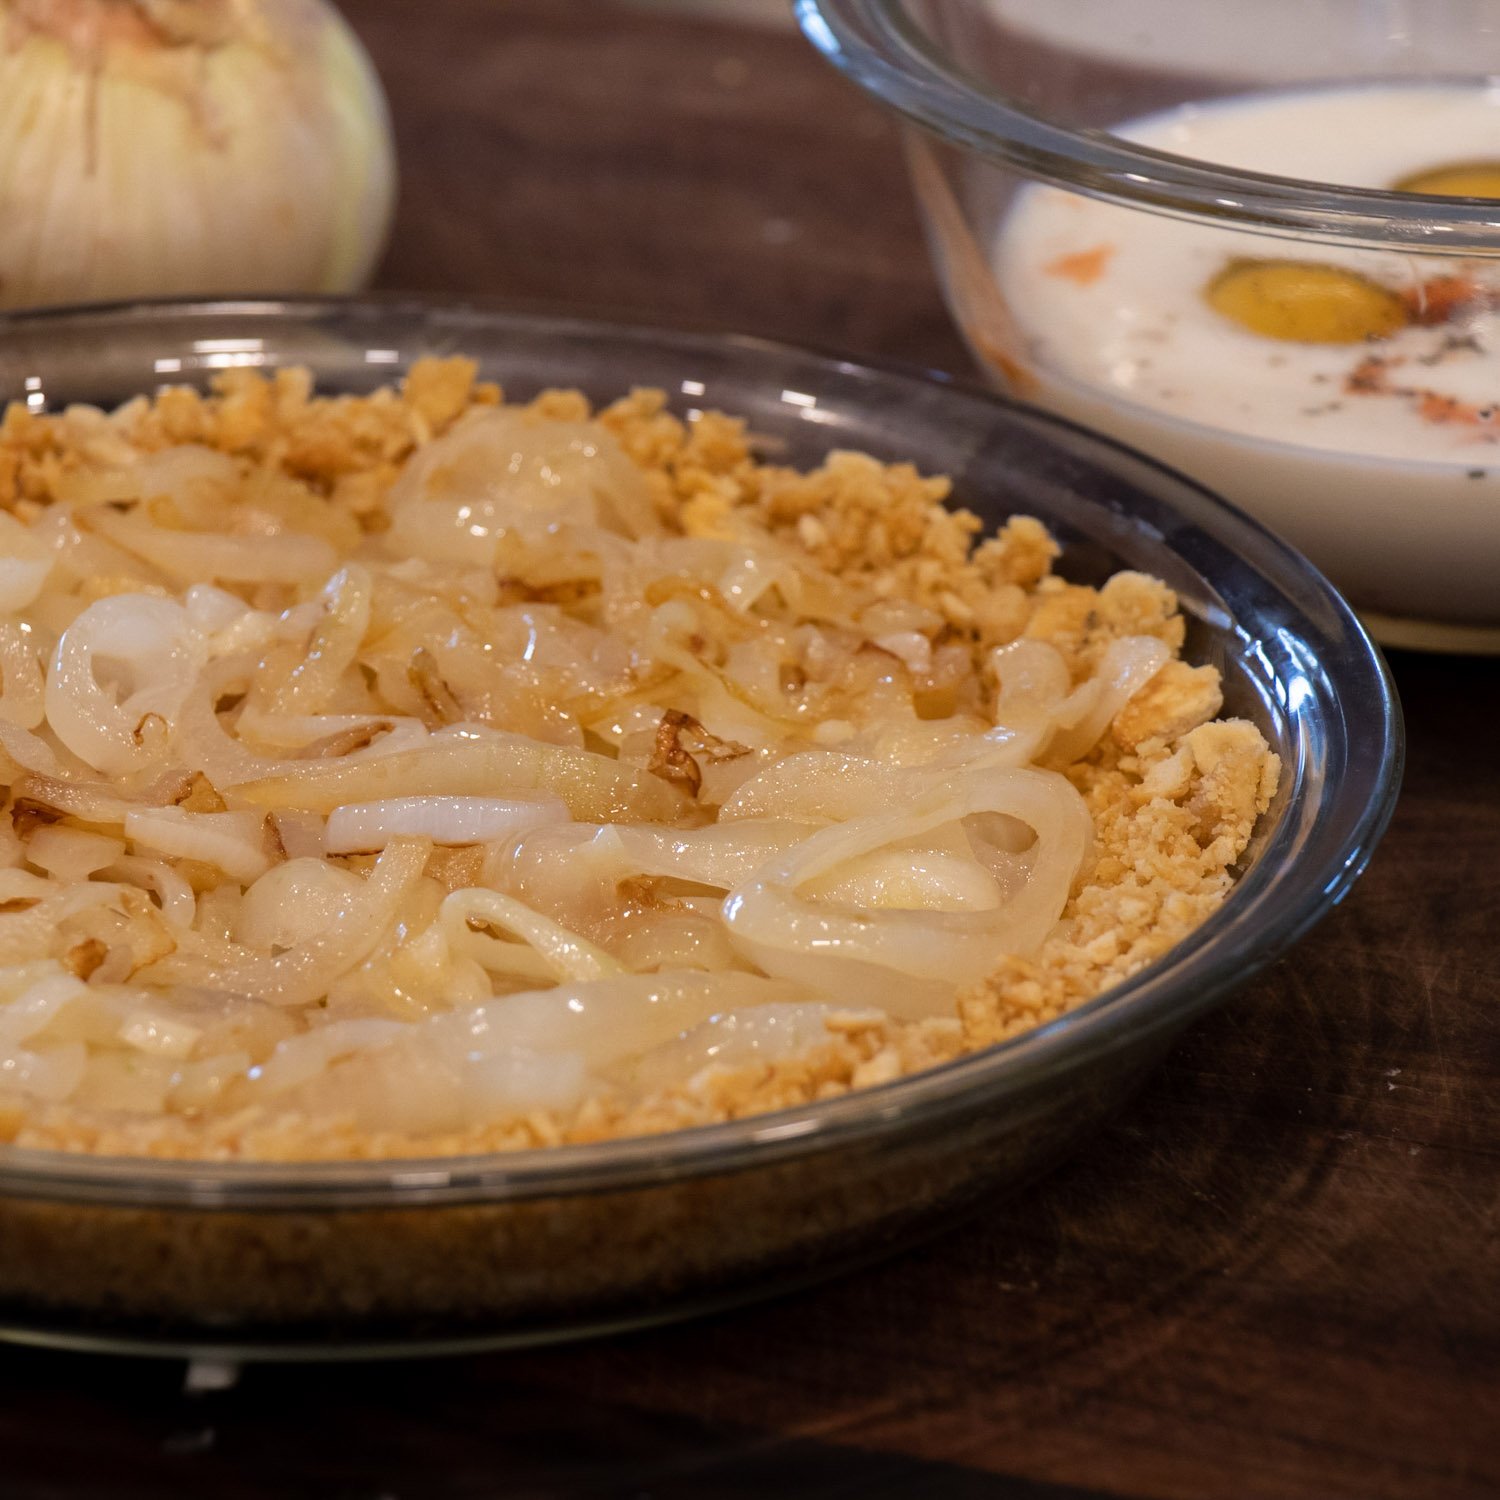 Sautéed onions spread across a pie crust.